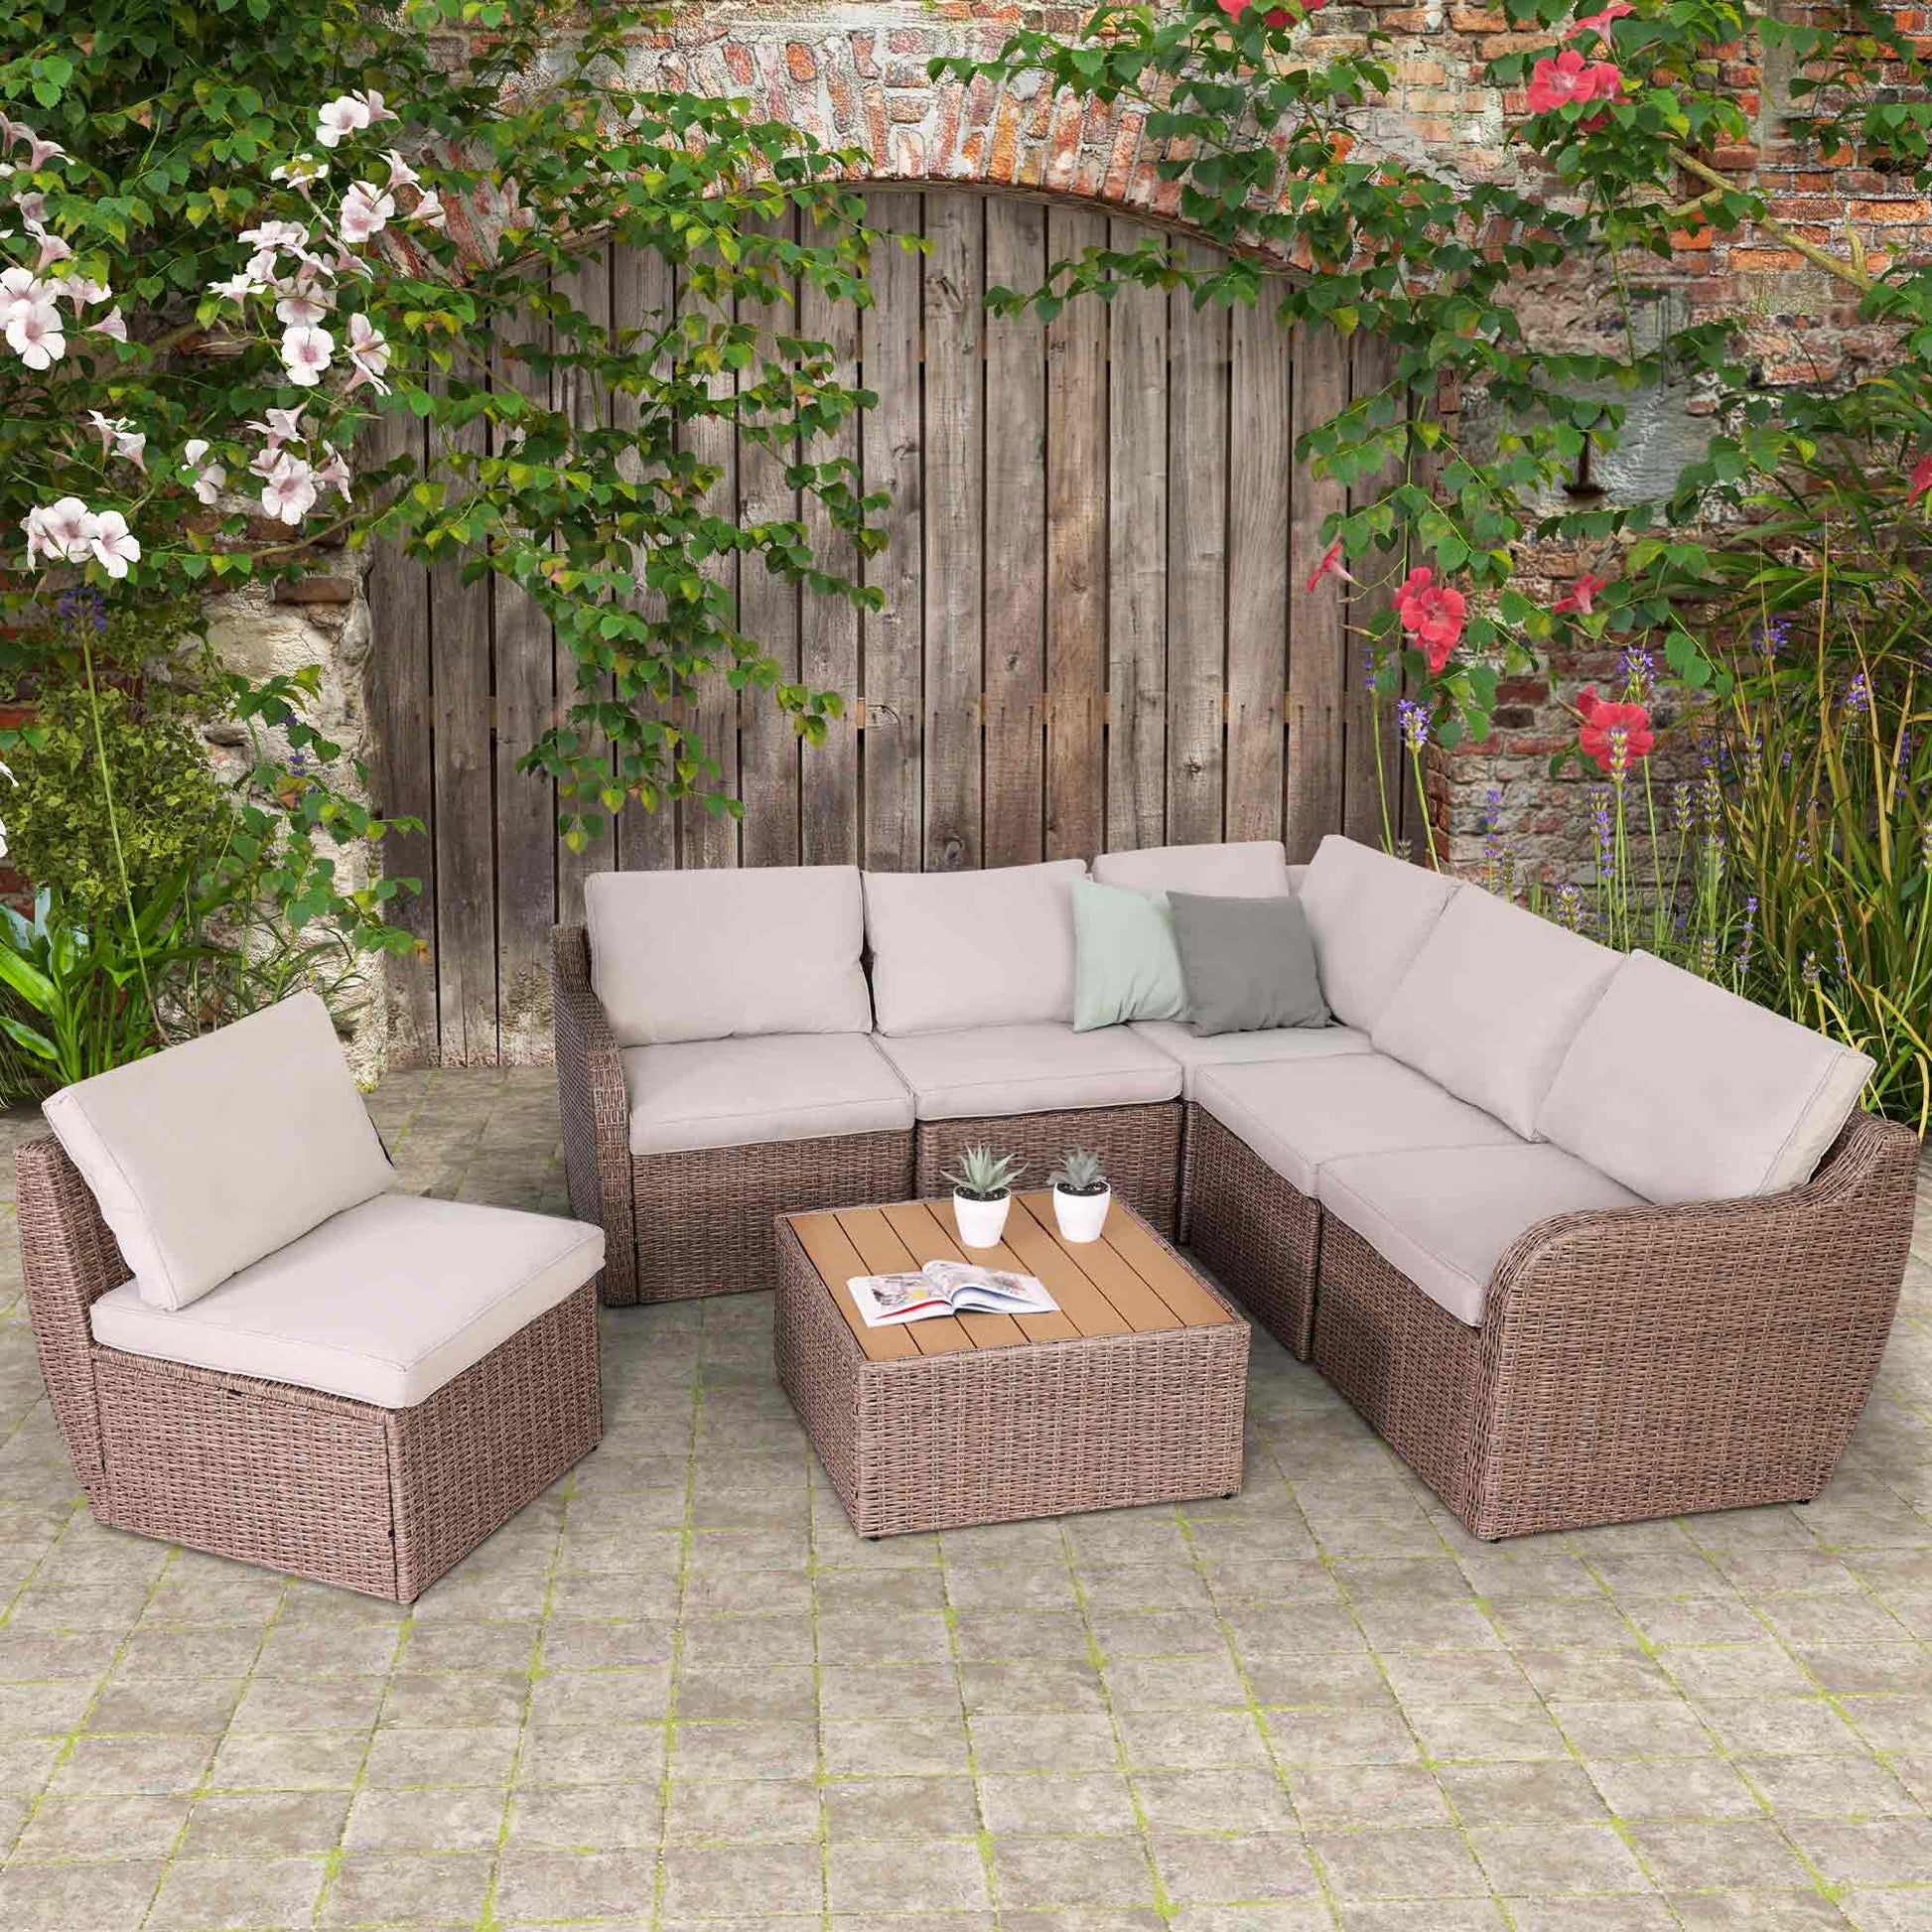 Homrest 7 pieces patio furniture set, outdoor conversation set with coffee table for garden, backyard, khaki